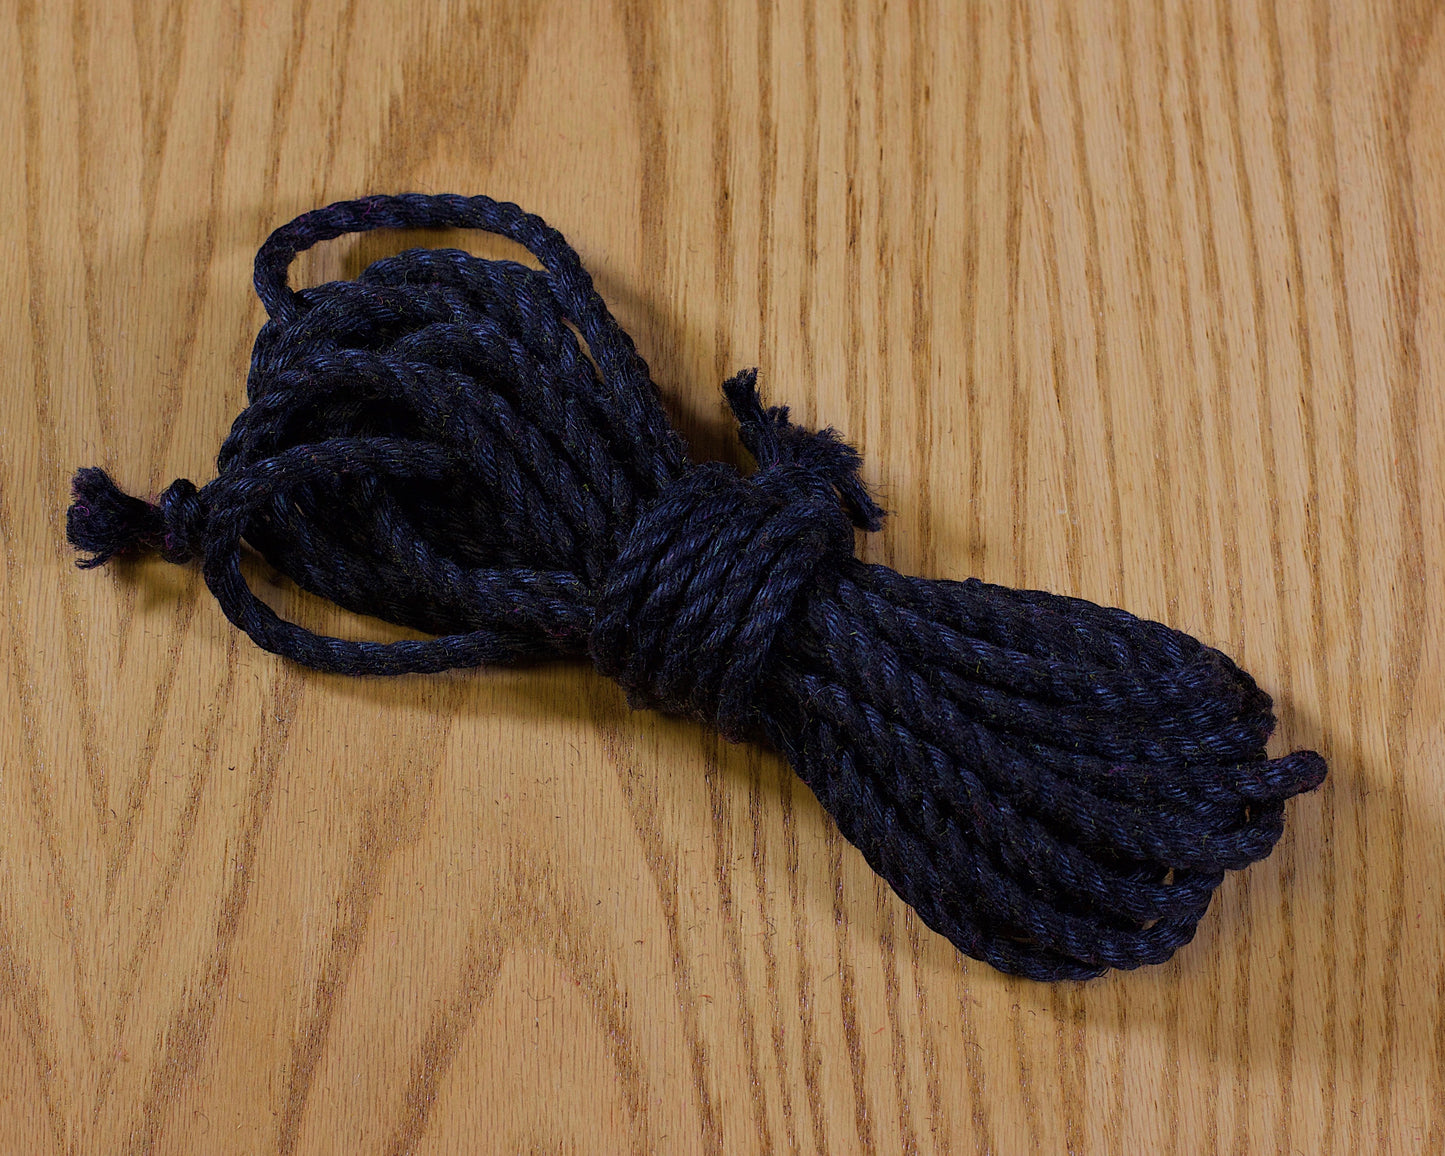 Ogawa Jute Rope, Treated (1 Rope) - Purple